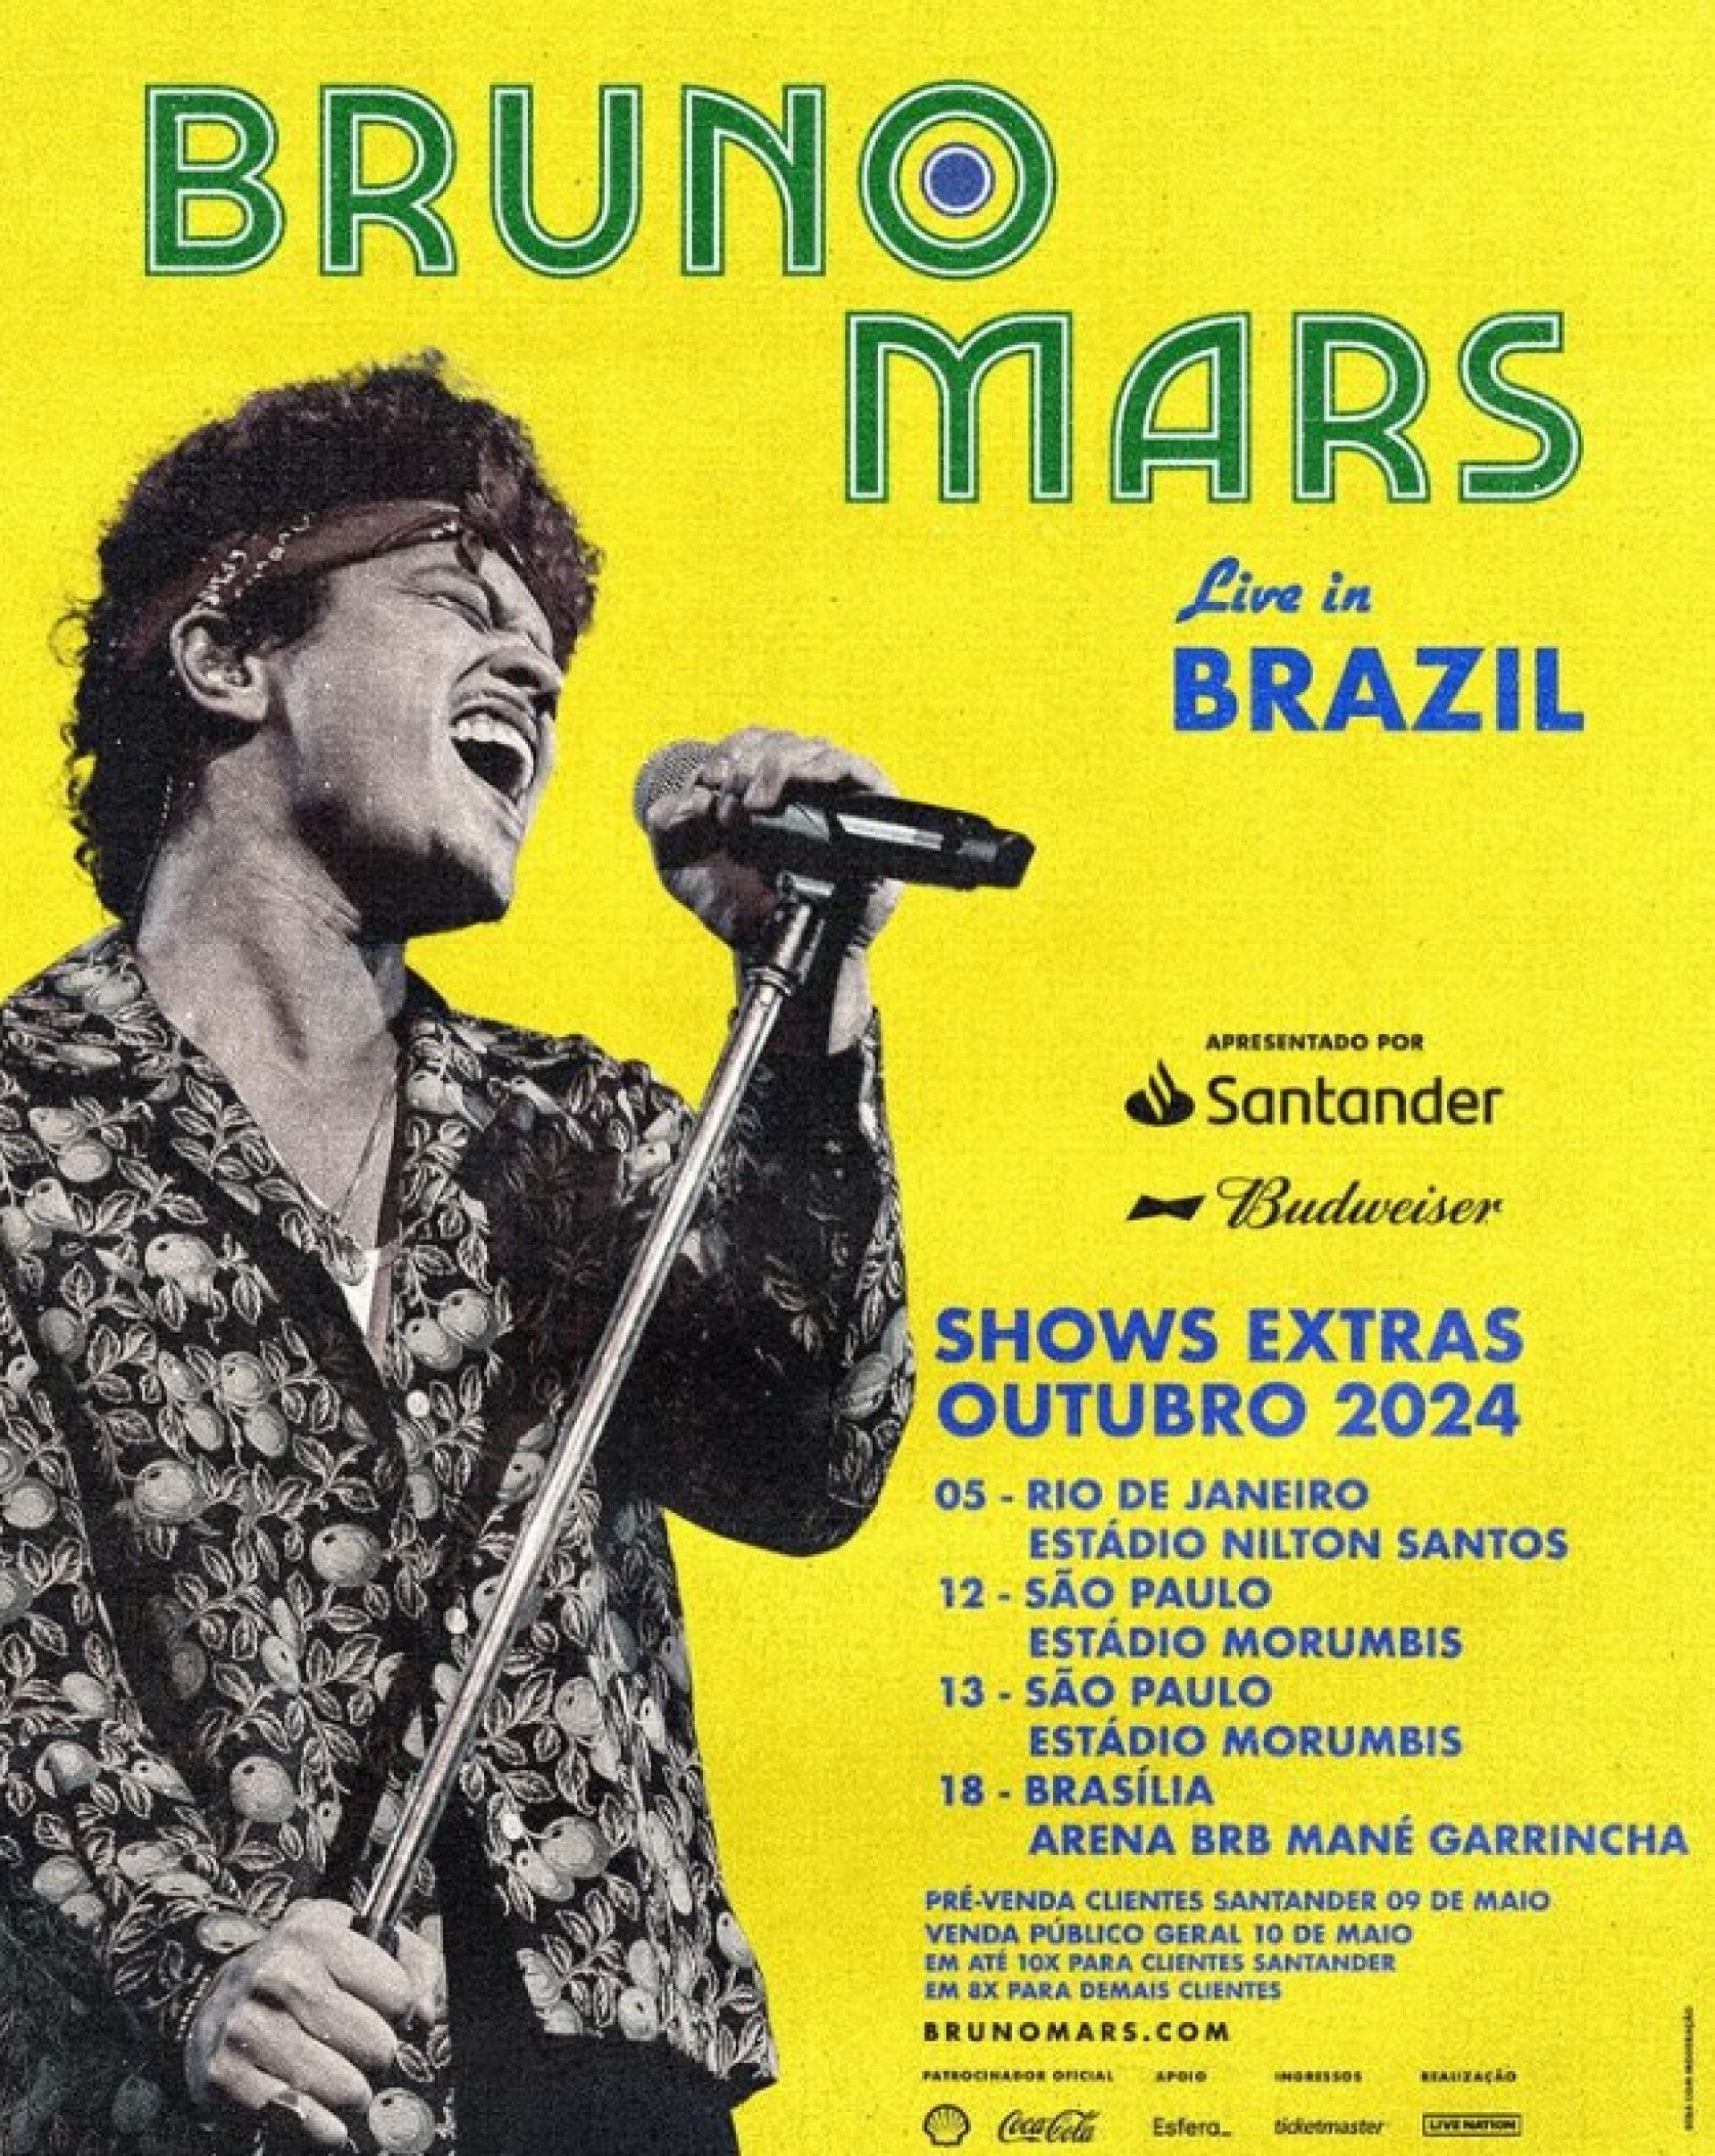 Bruno Mars announces extra show in Rio - Reproduction / Instagram